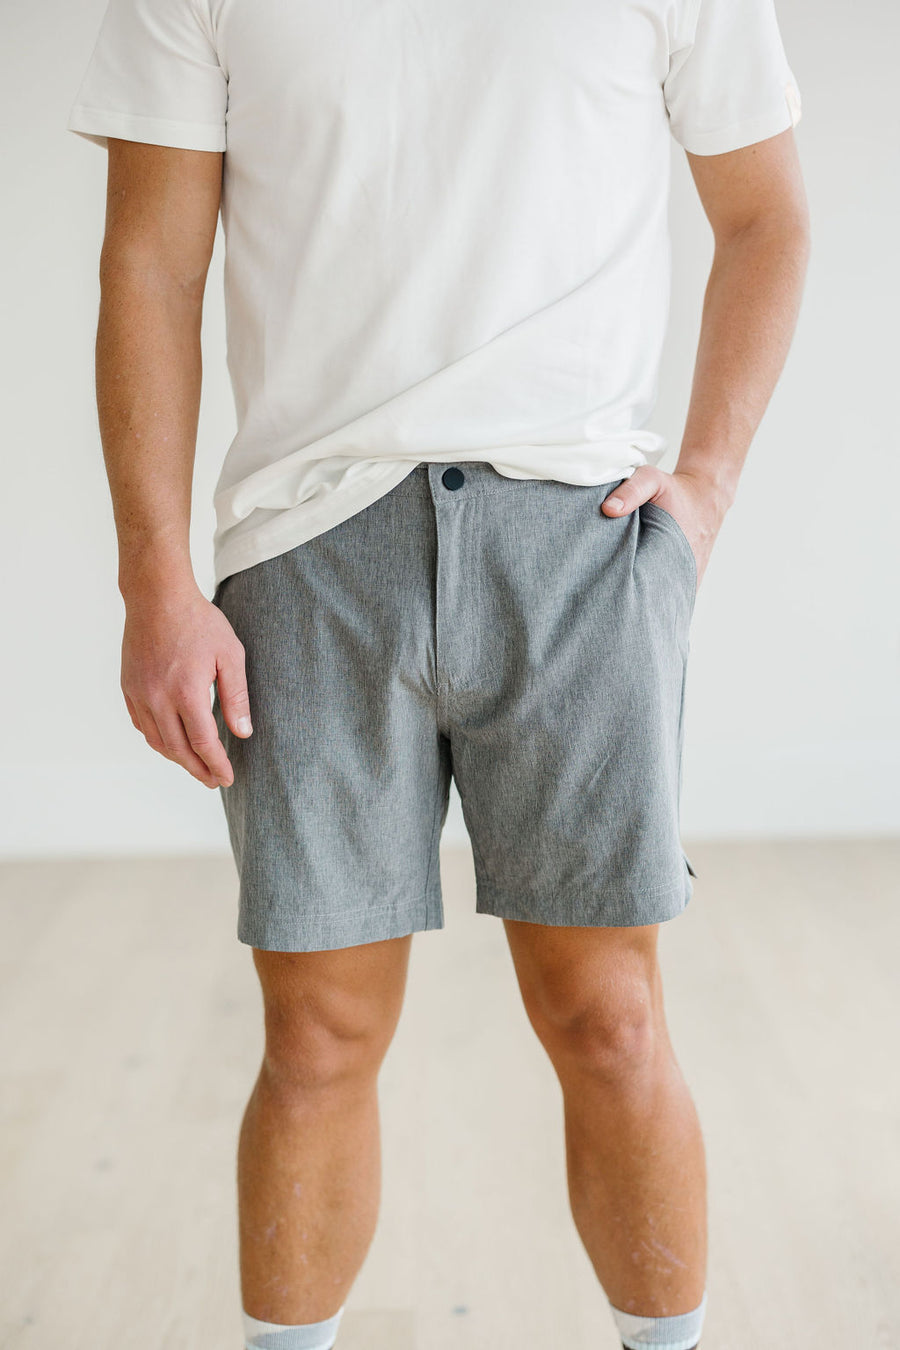 Fehrnvi Men's All Day Shorts in Urban Gray